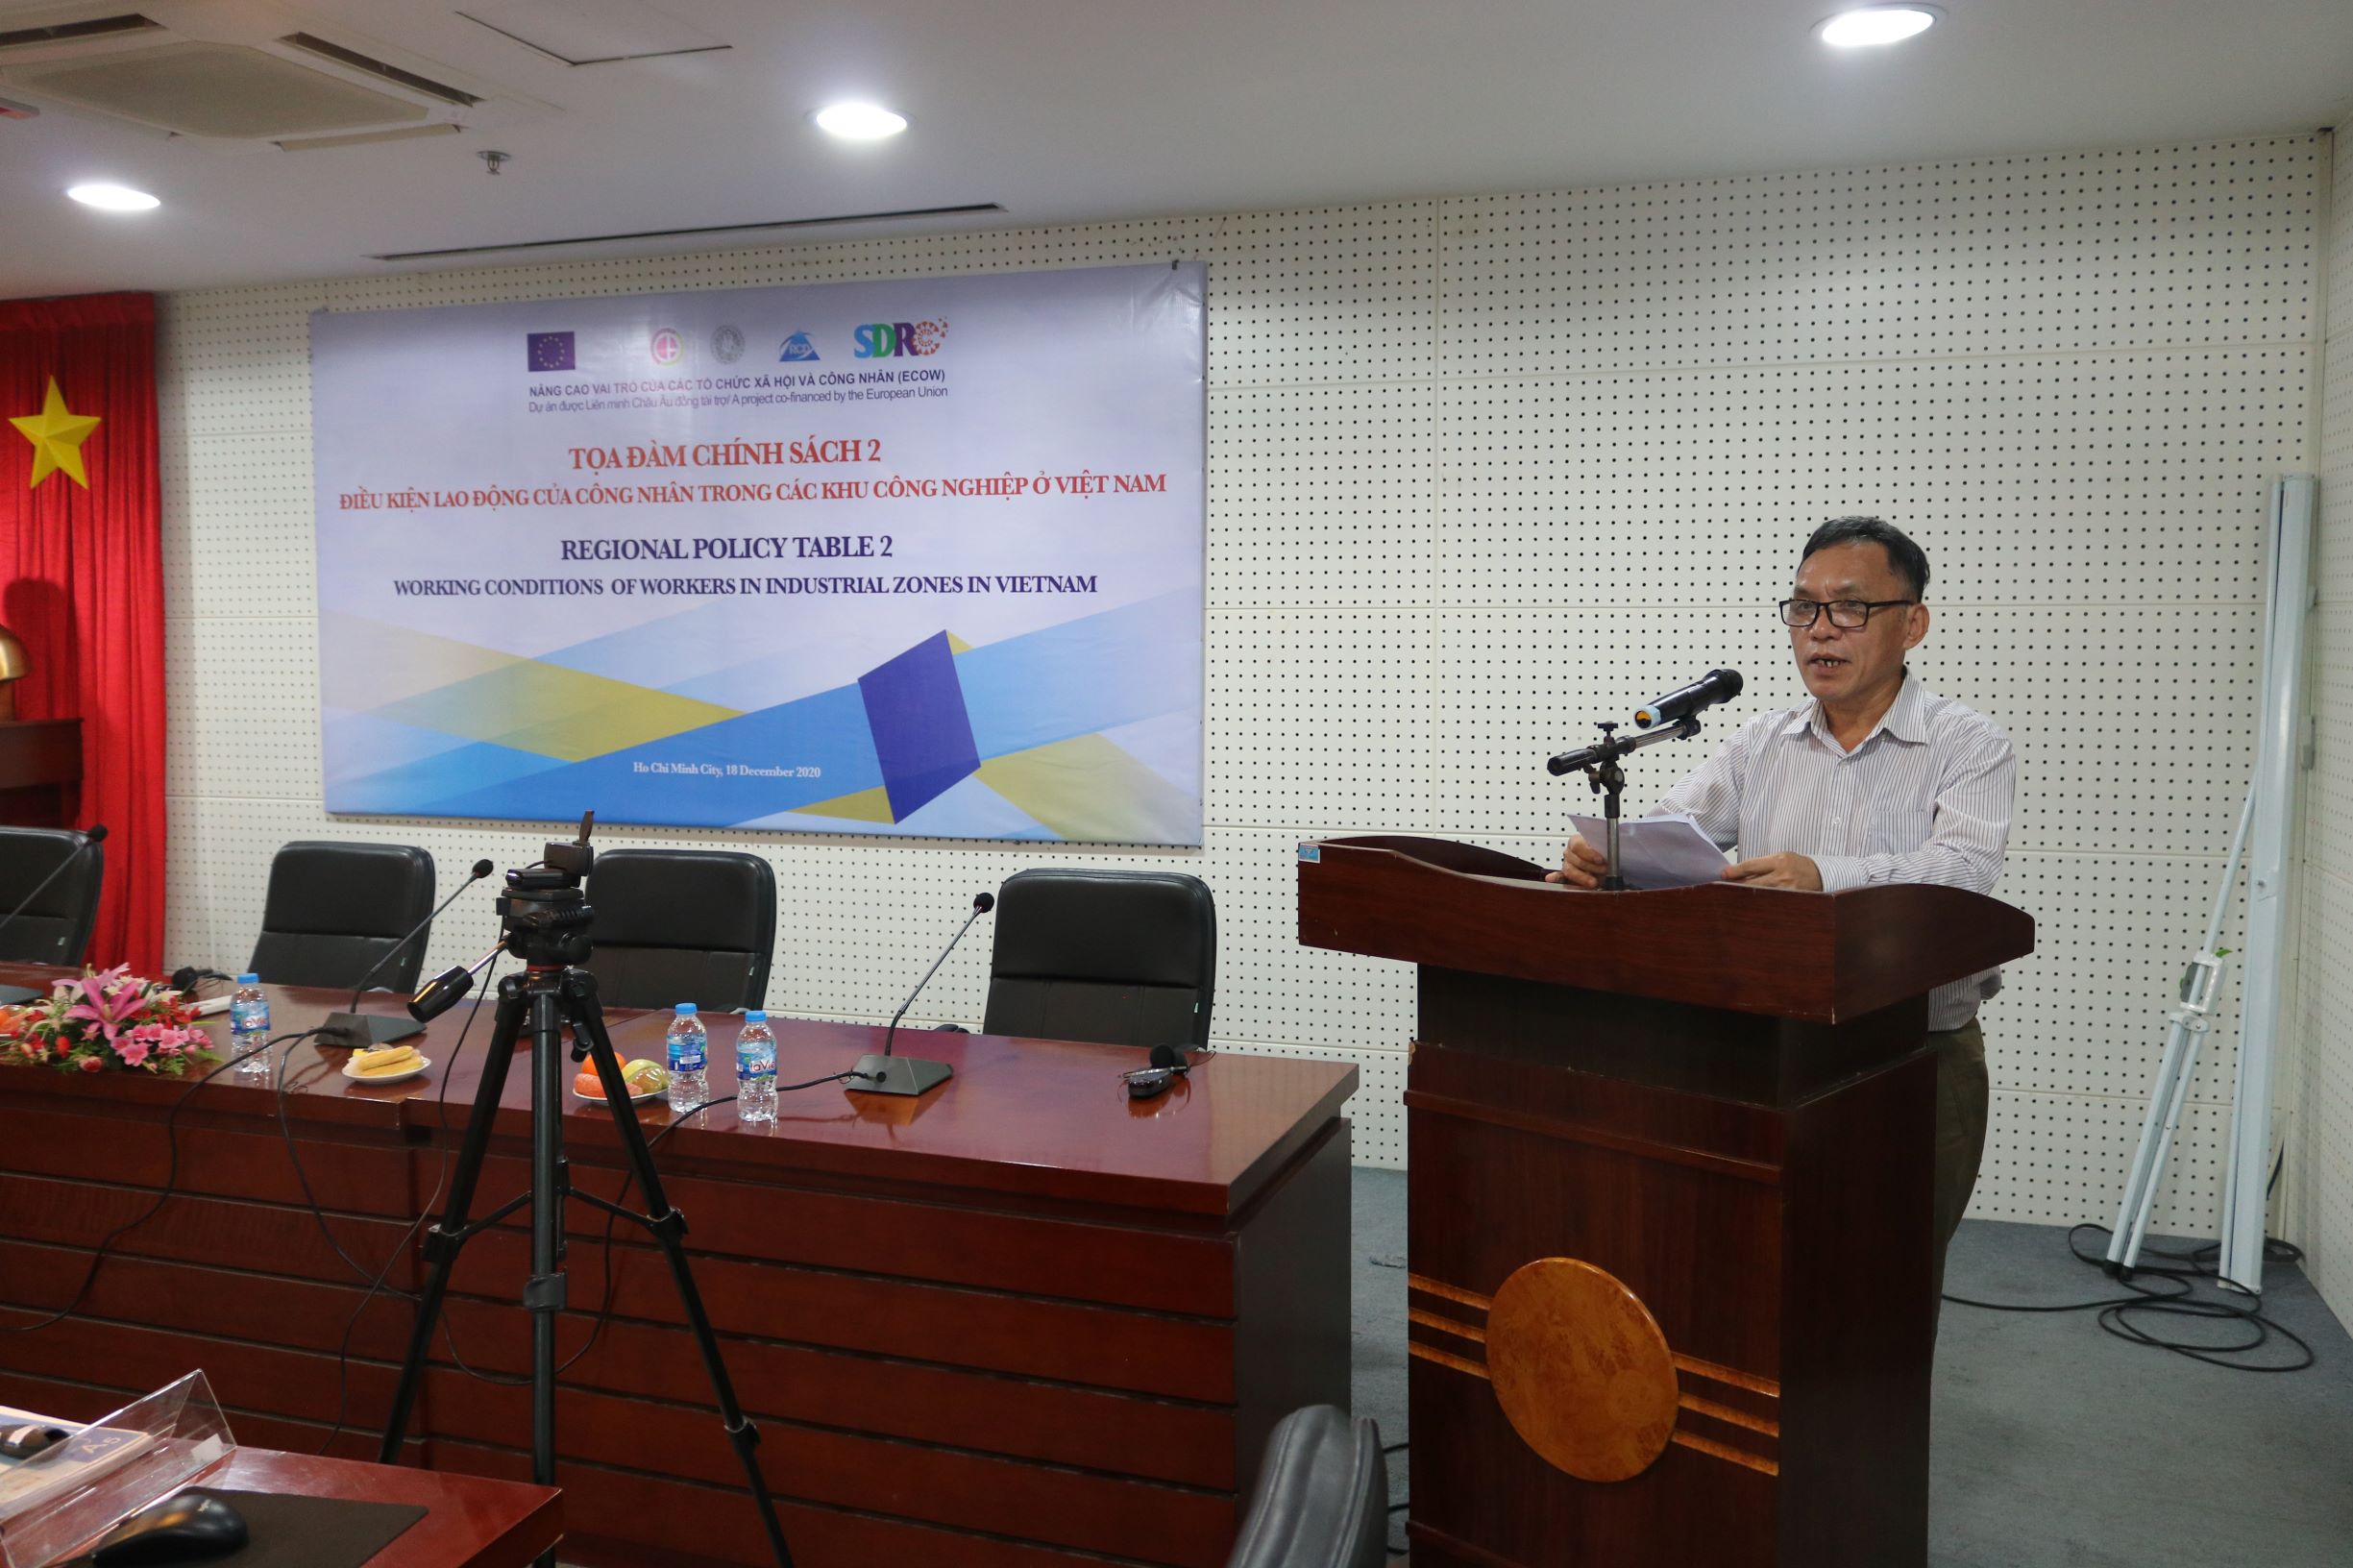 Assoc.Prof.Dr. Nguyen An Ha, Project Coordinator speaking <br>